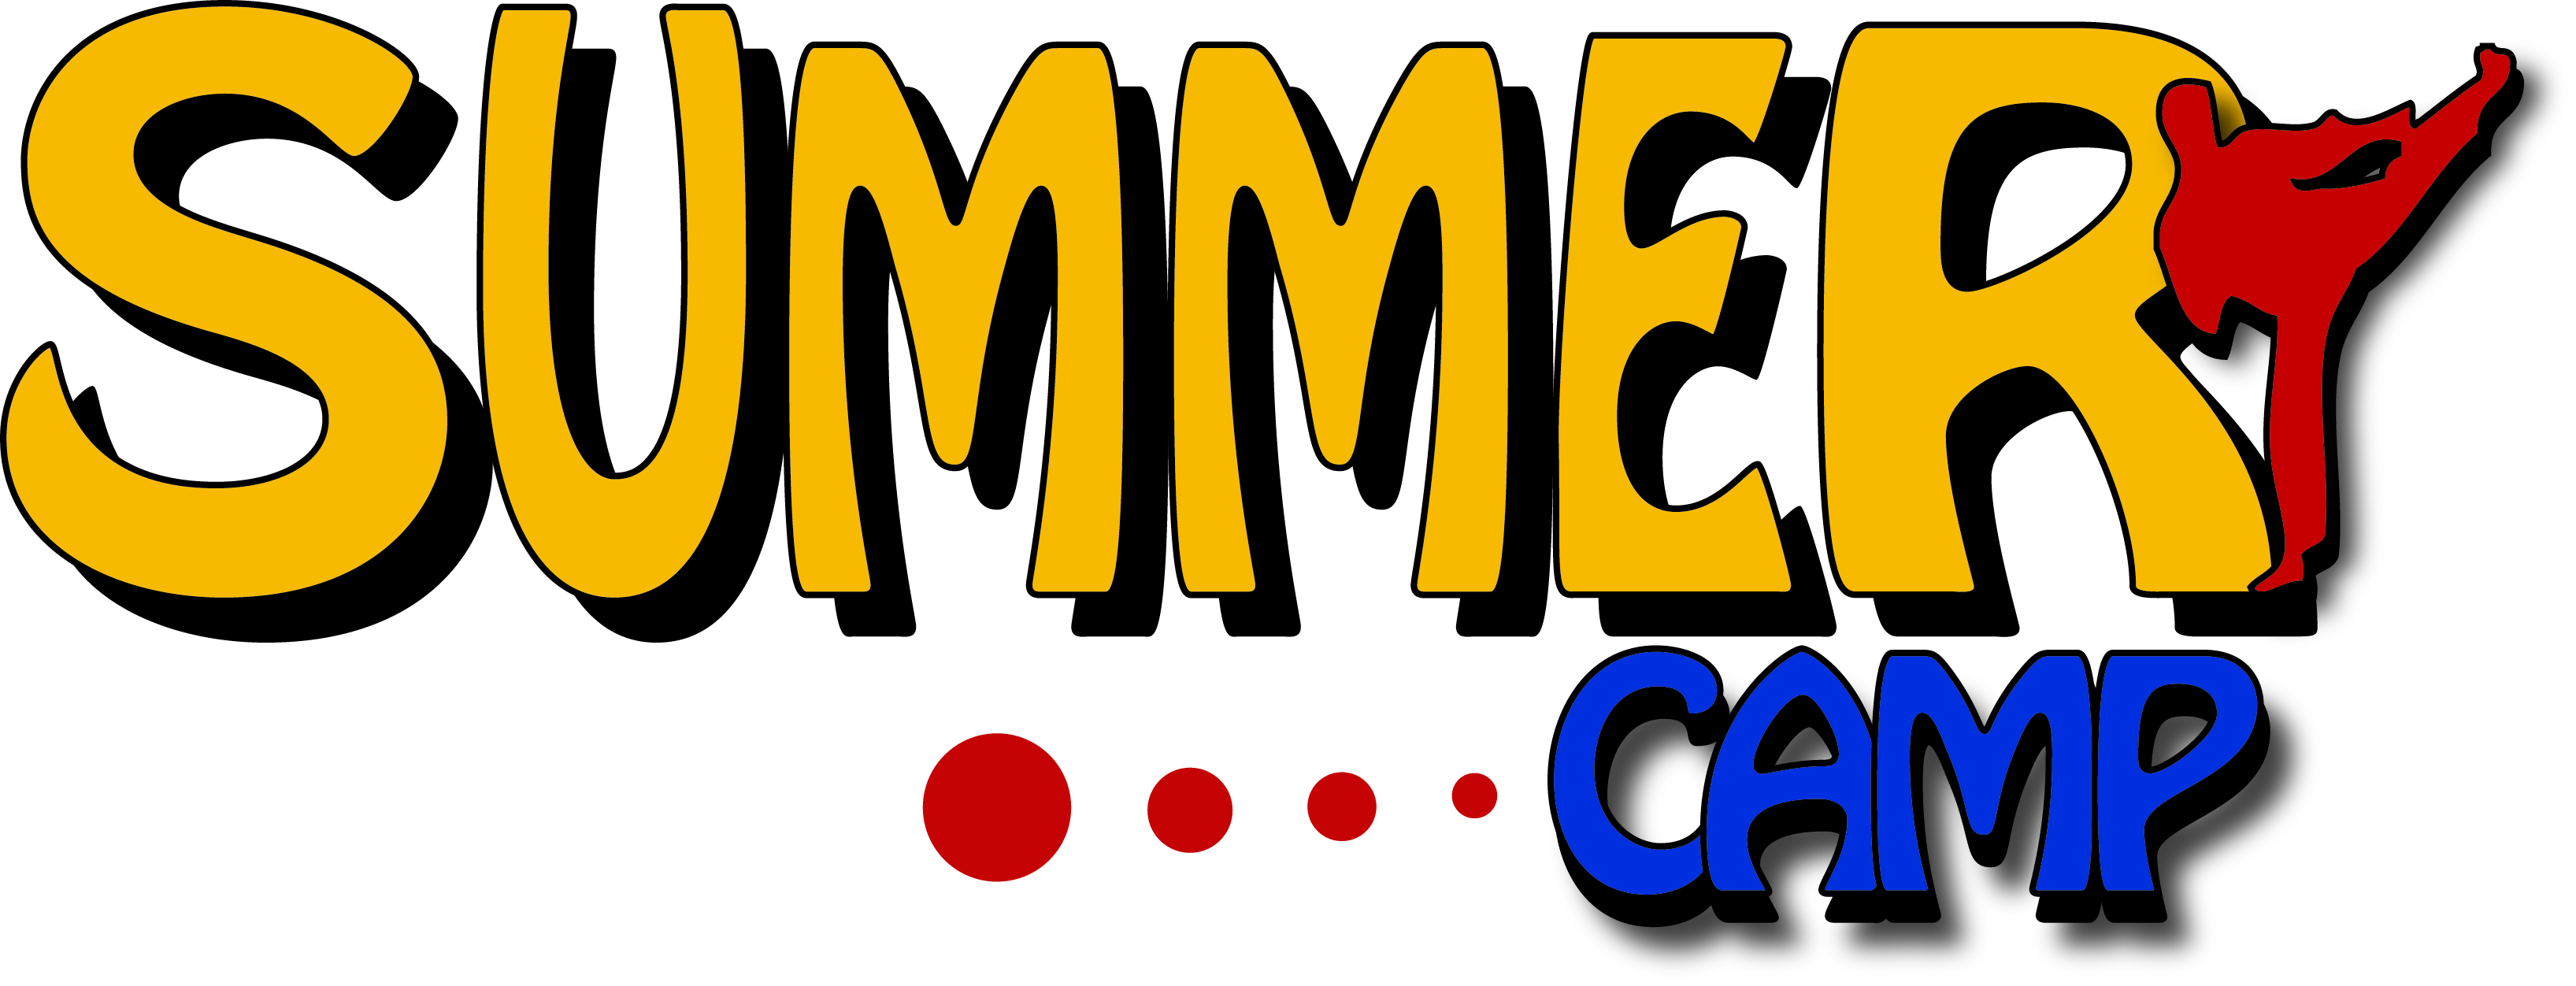 Summer camp camps taekwondo center clip art